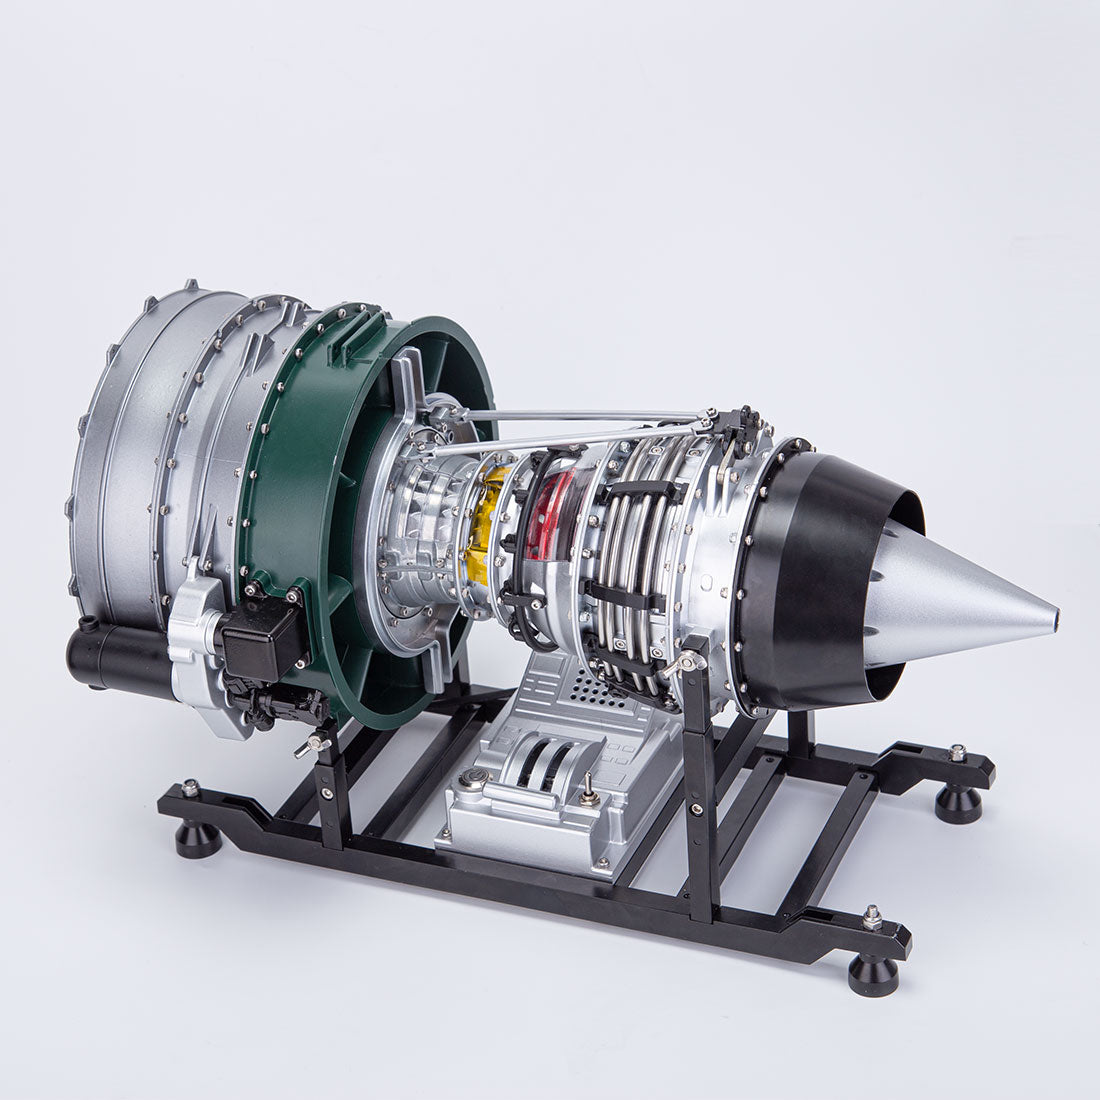 teching metal turbofan engine model kit that works build your own jet engine building set kota scale model DM119